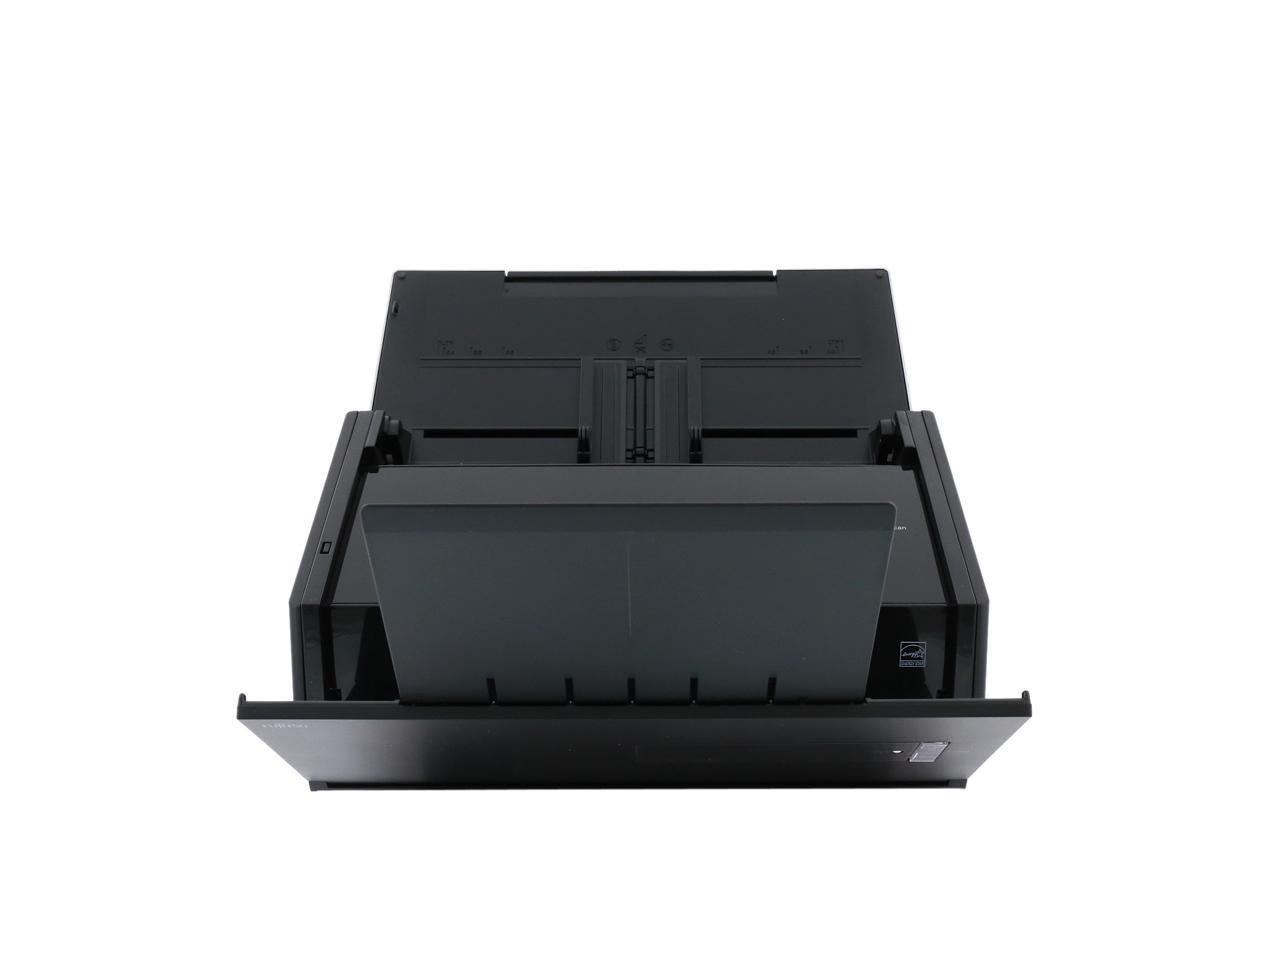 fujitsu scansnap ix500 color duplex desk scanner